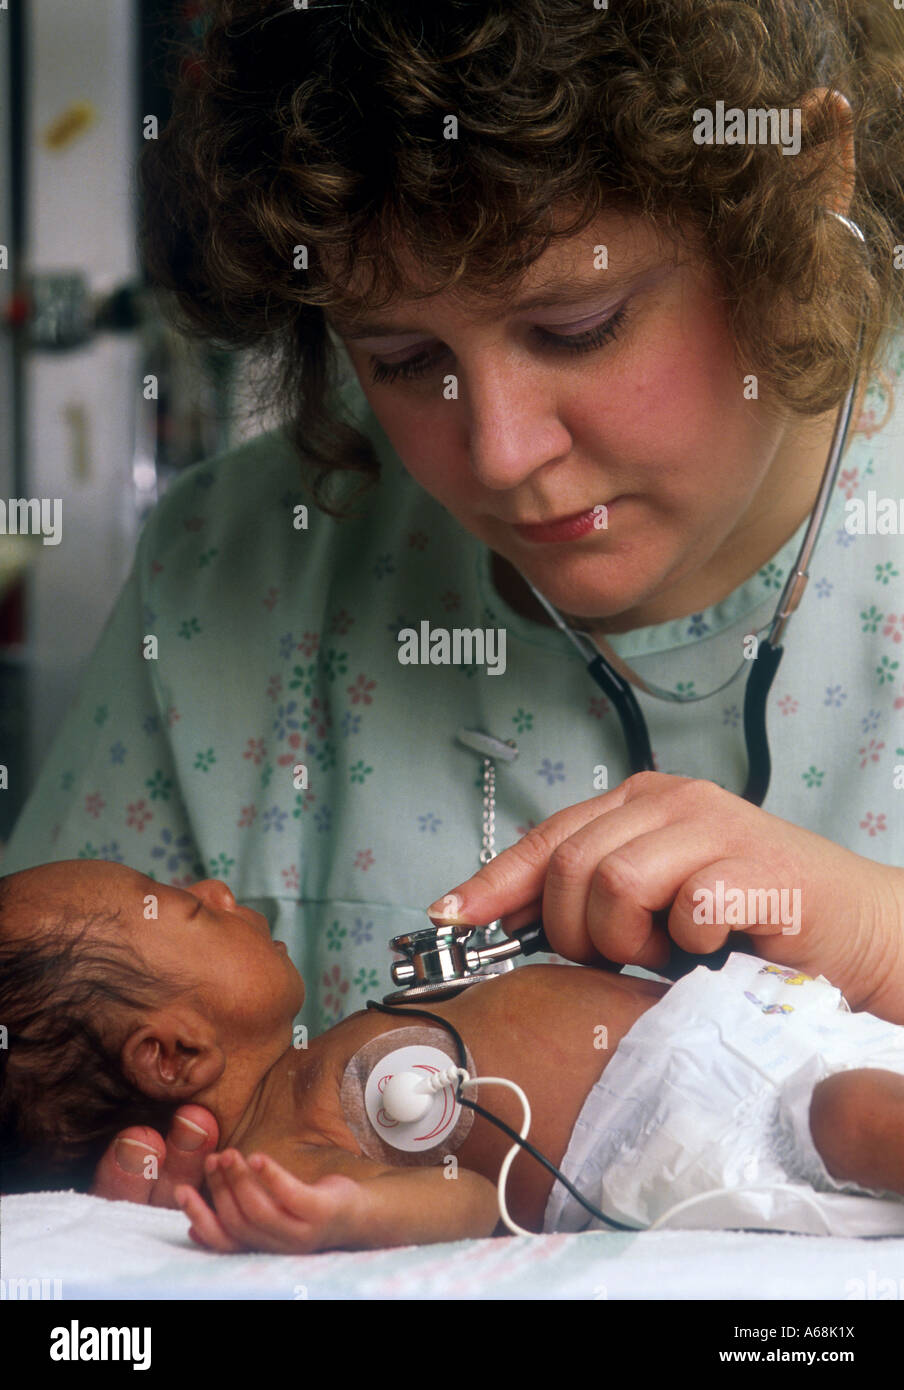 Premature infant in intensive care unit. Stock Photo